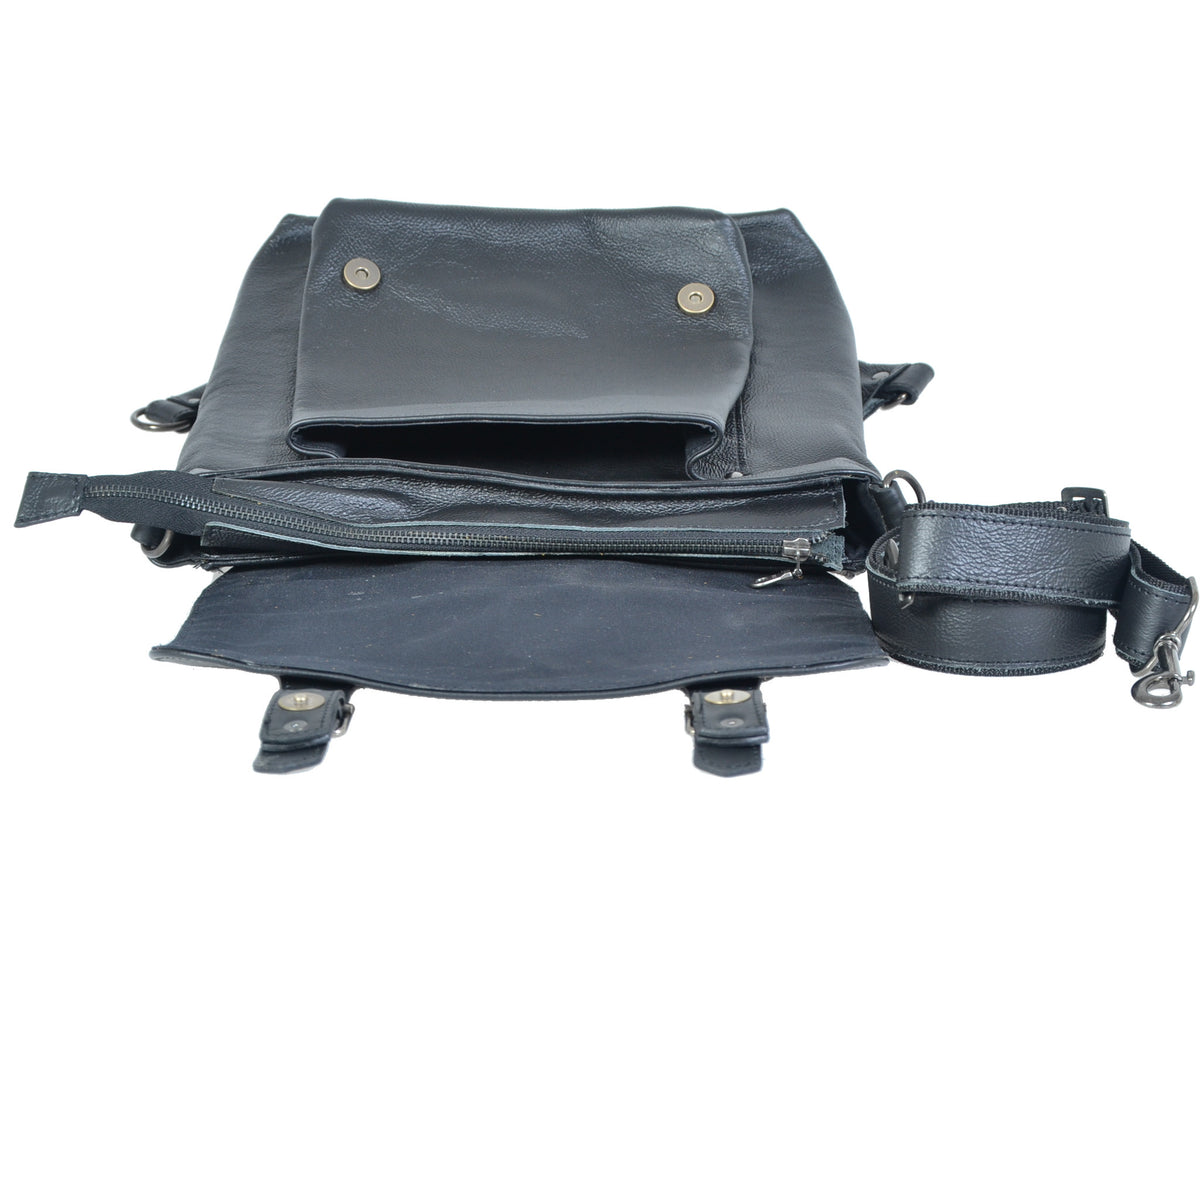 13 Inch Leather Satchel Sling Backpack - kingkong-leather